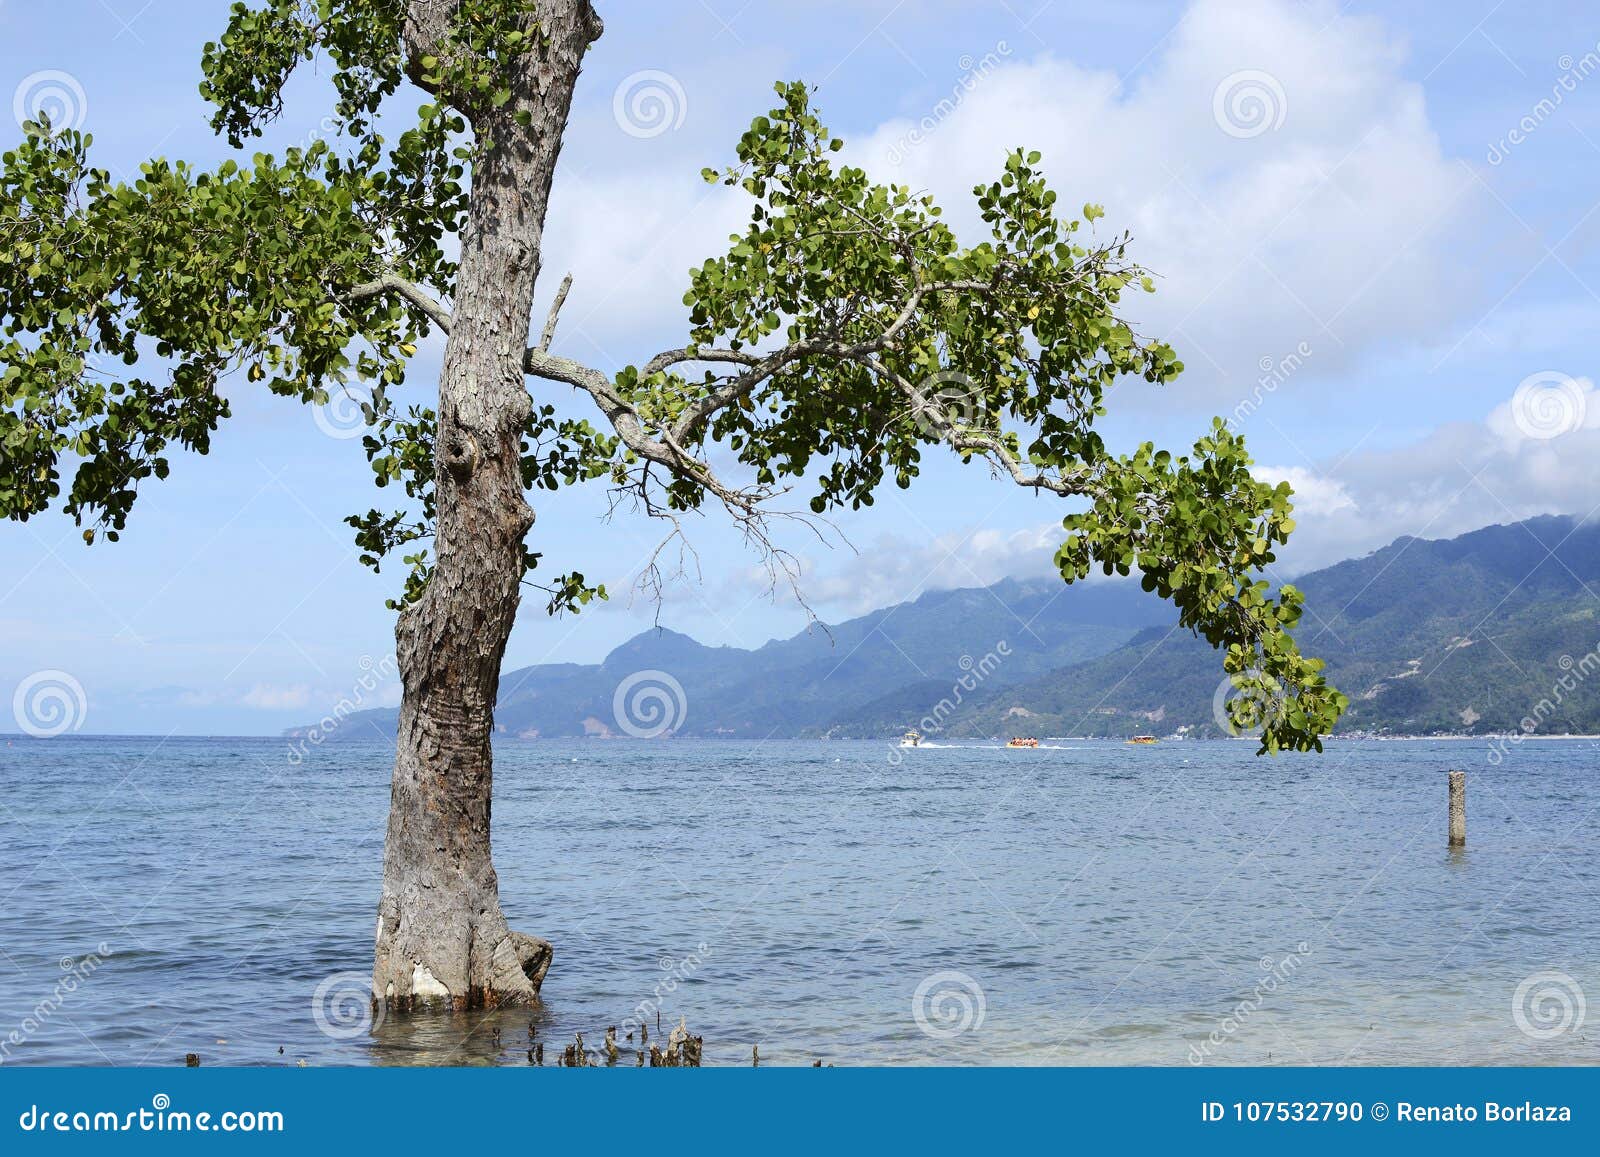 mangrove tree naturally grow on white sand beach